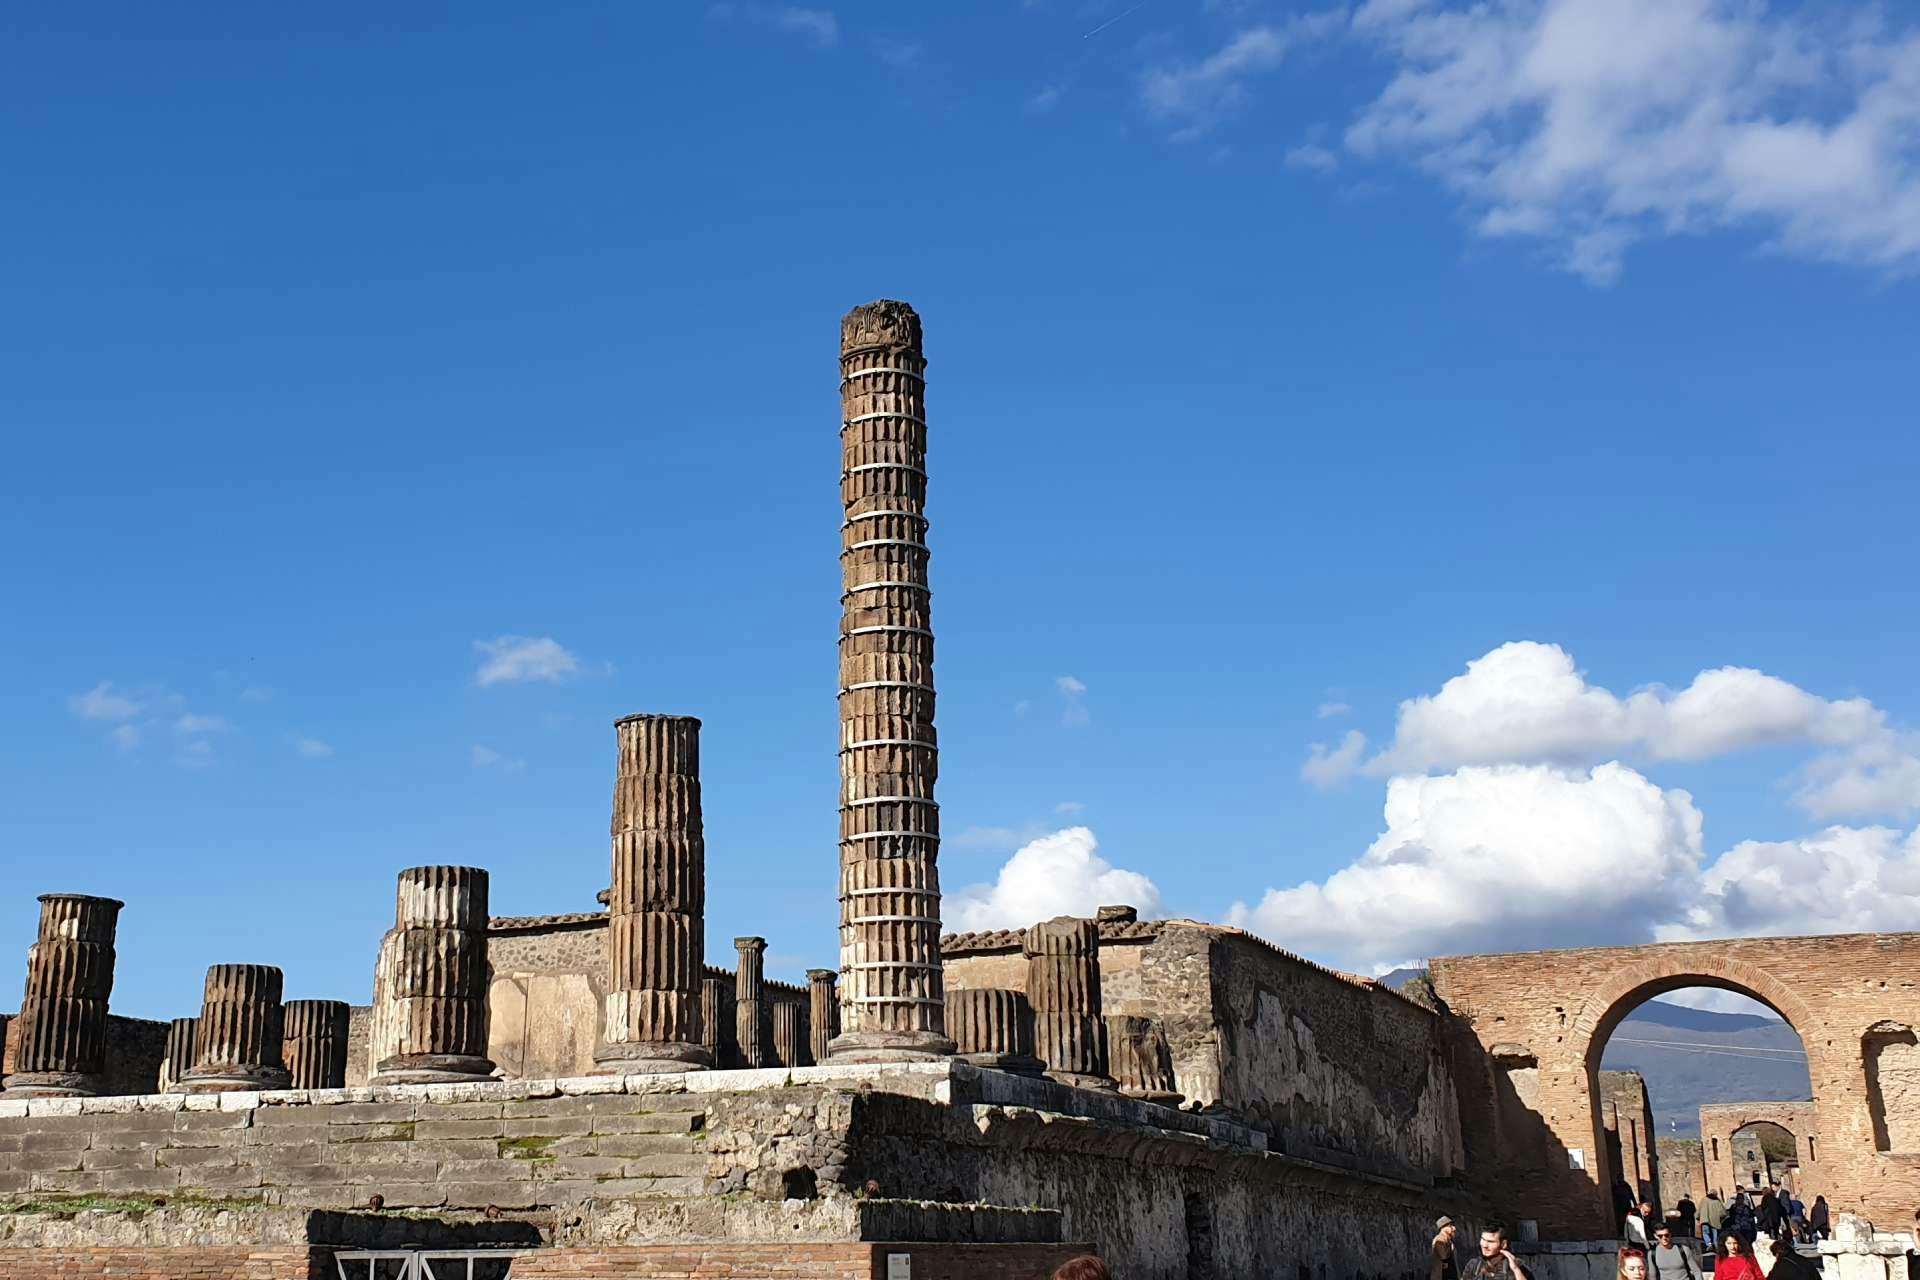 The Ancient Charm of Pompeii